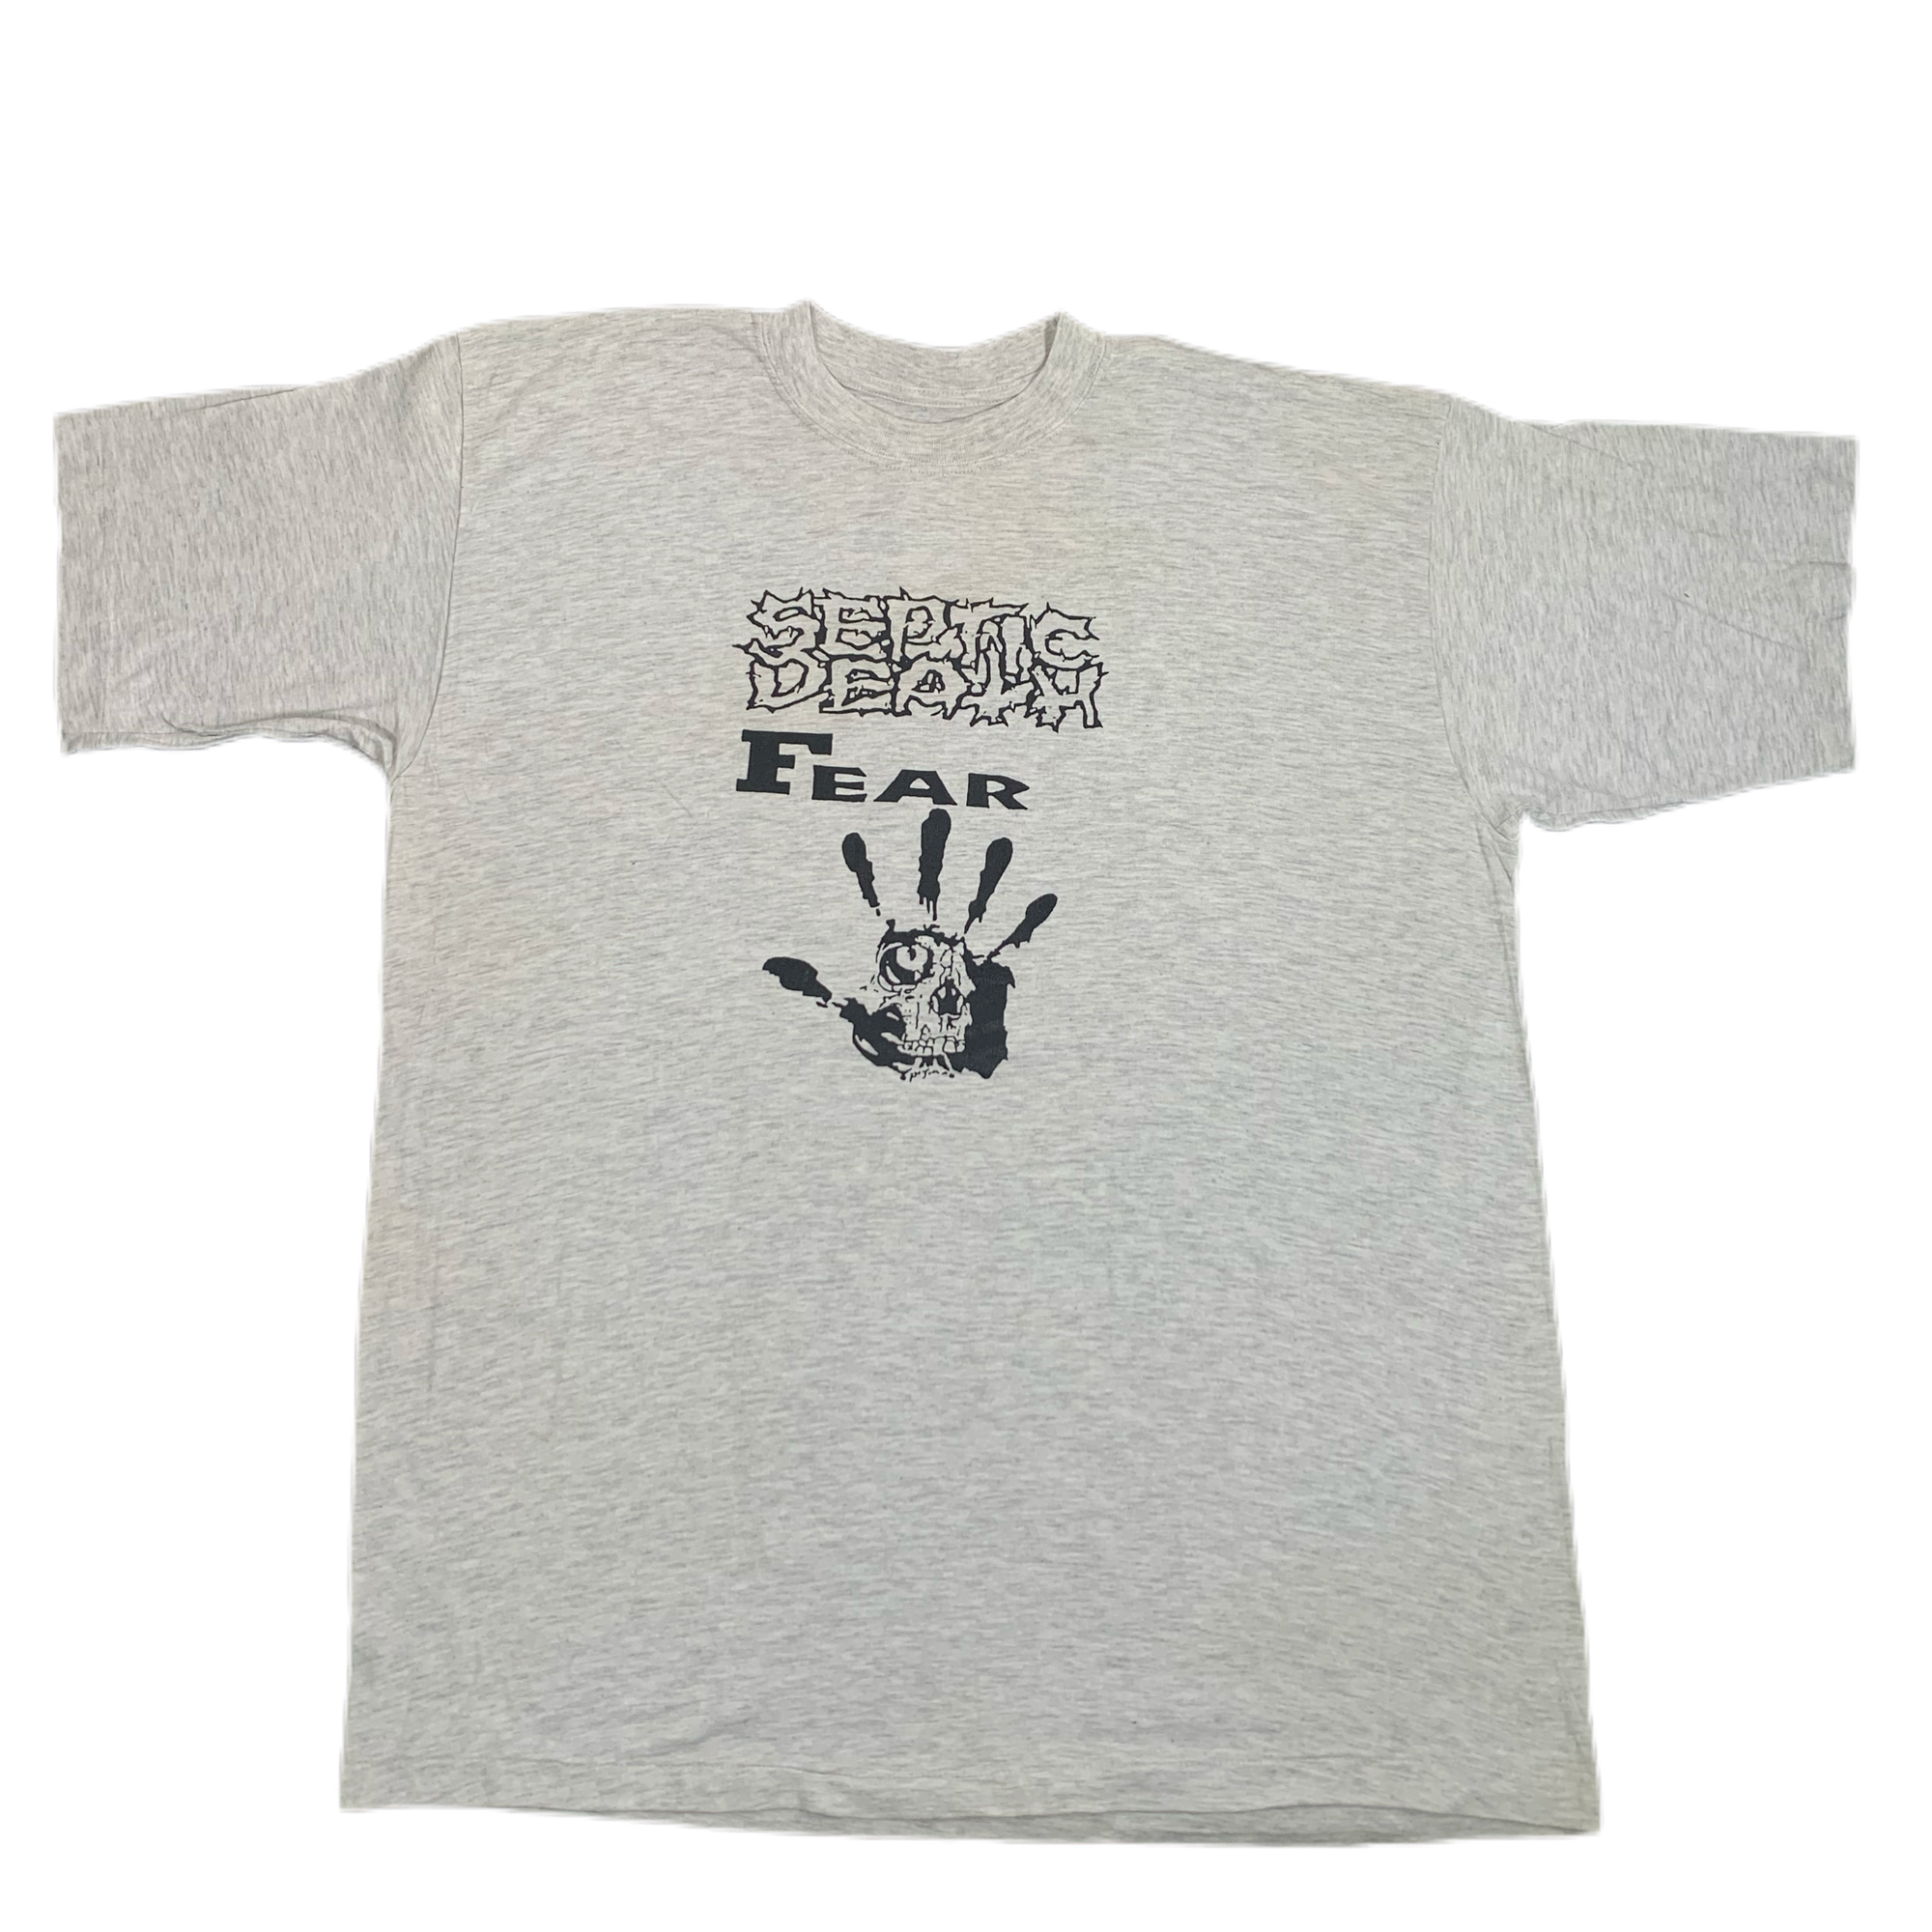 Vintage Septic Death "Fear" T-Shirt - jointcustodydc